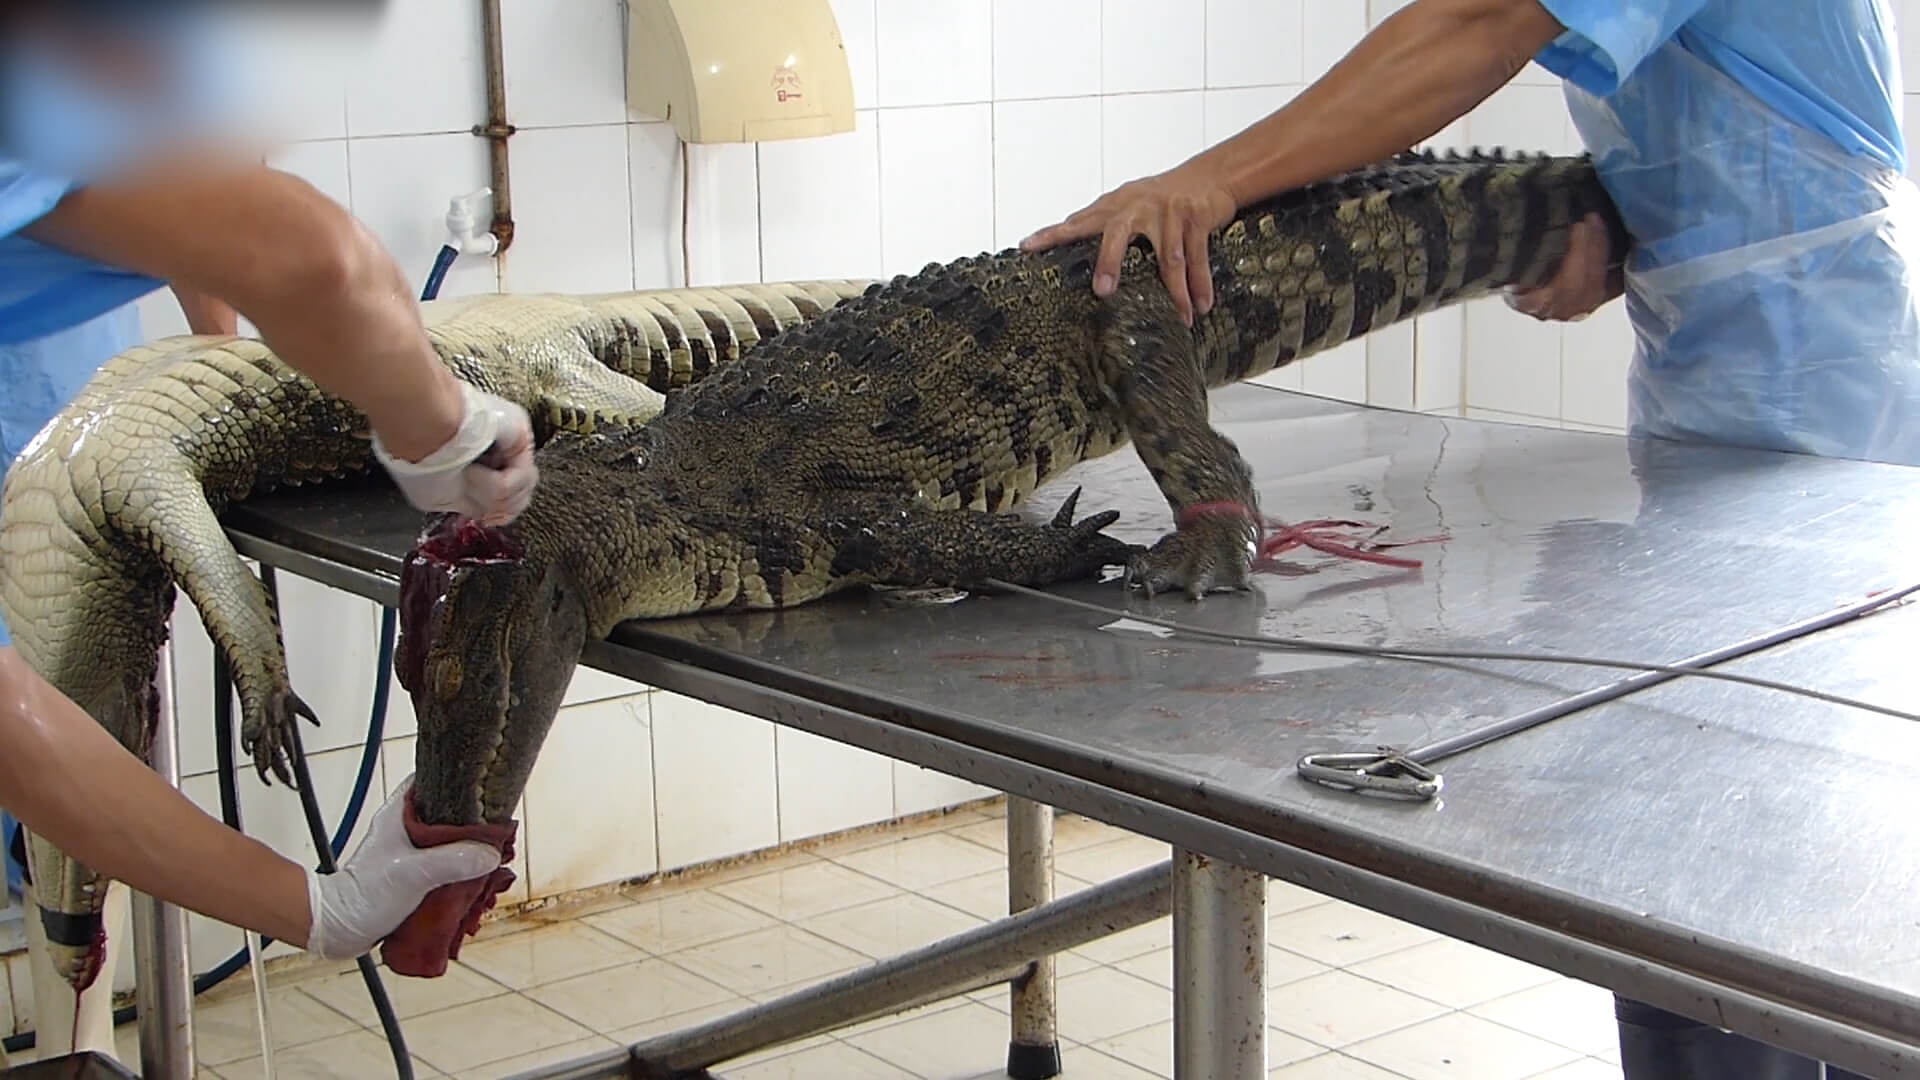 Crocodile-Skin Export Tax Killing Industry, Zambian Farmers Warn - Bloomberg